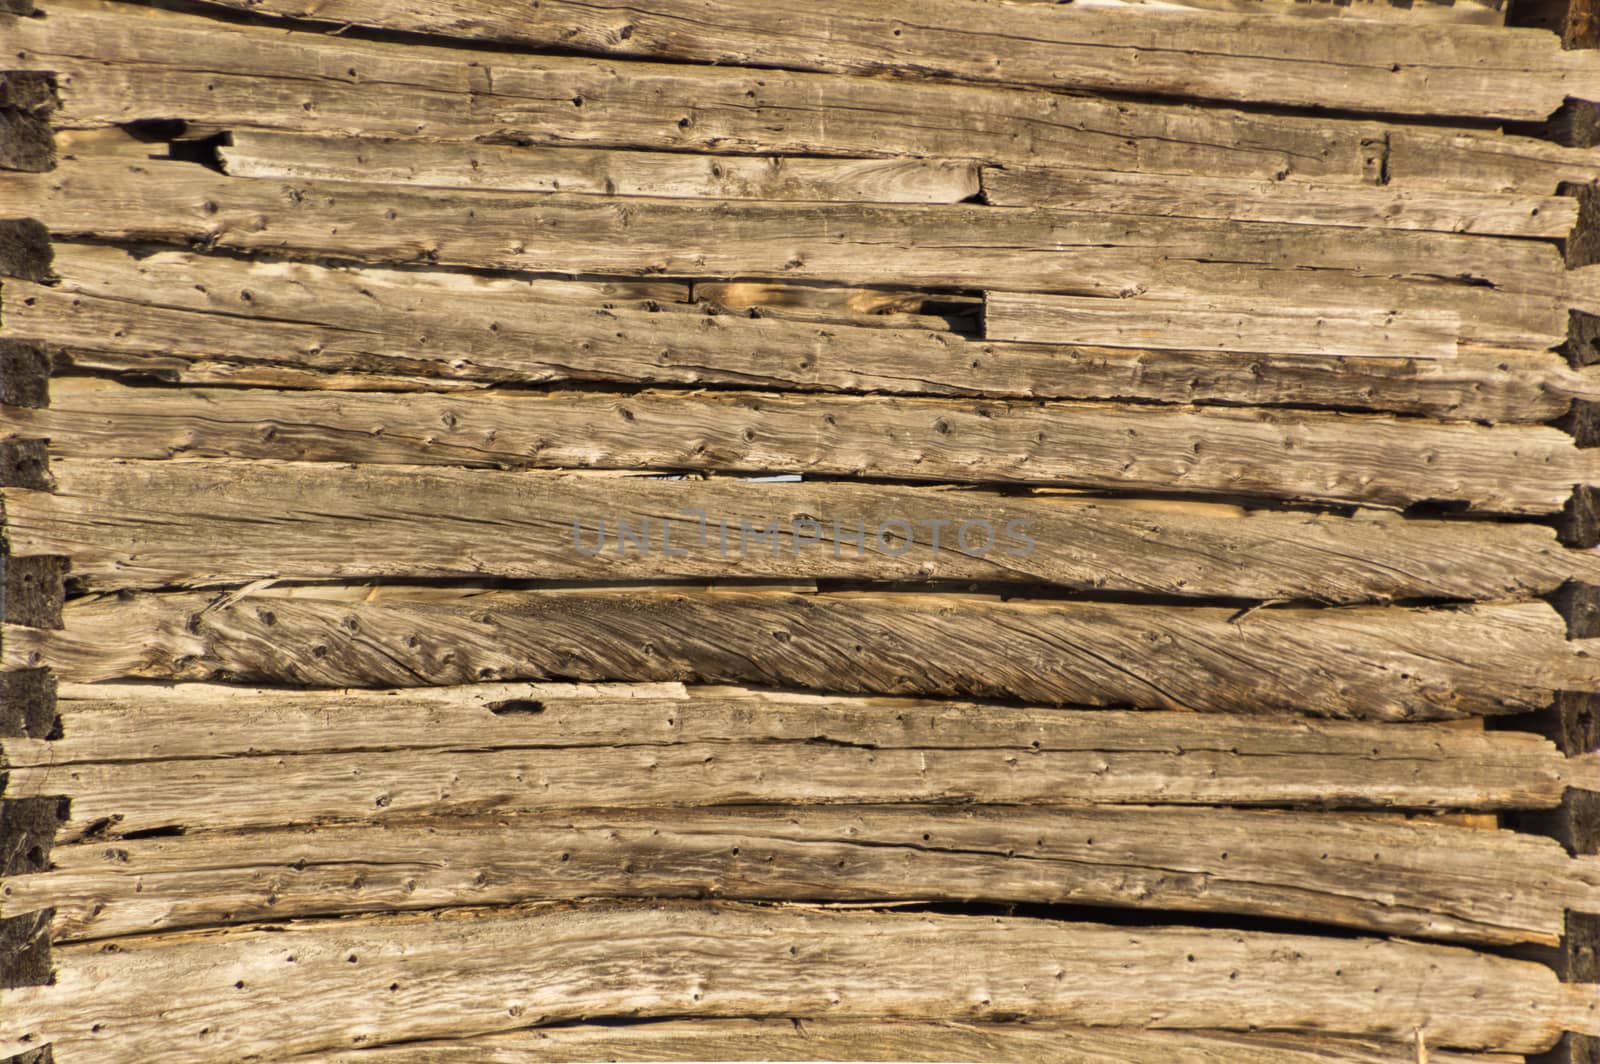 Closeup of bendy pioneer log cabin barn logs.